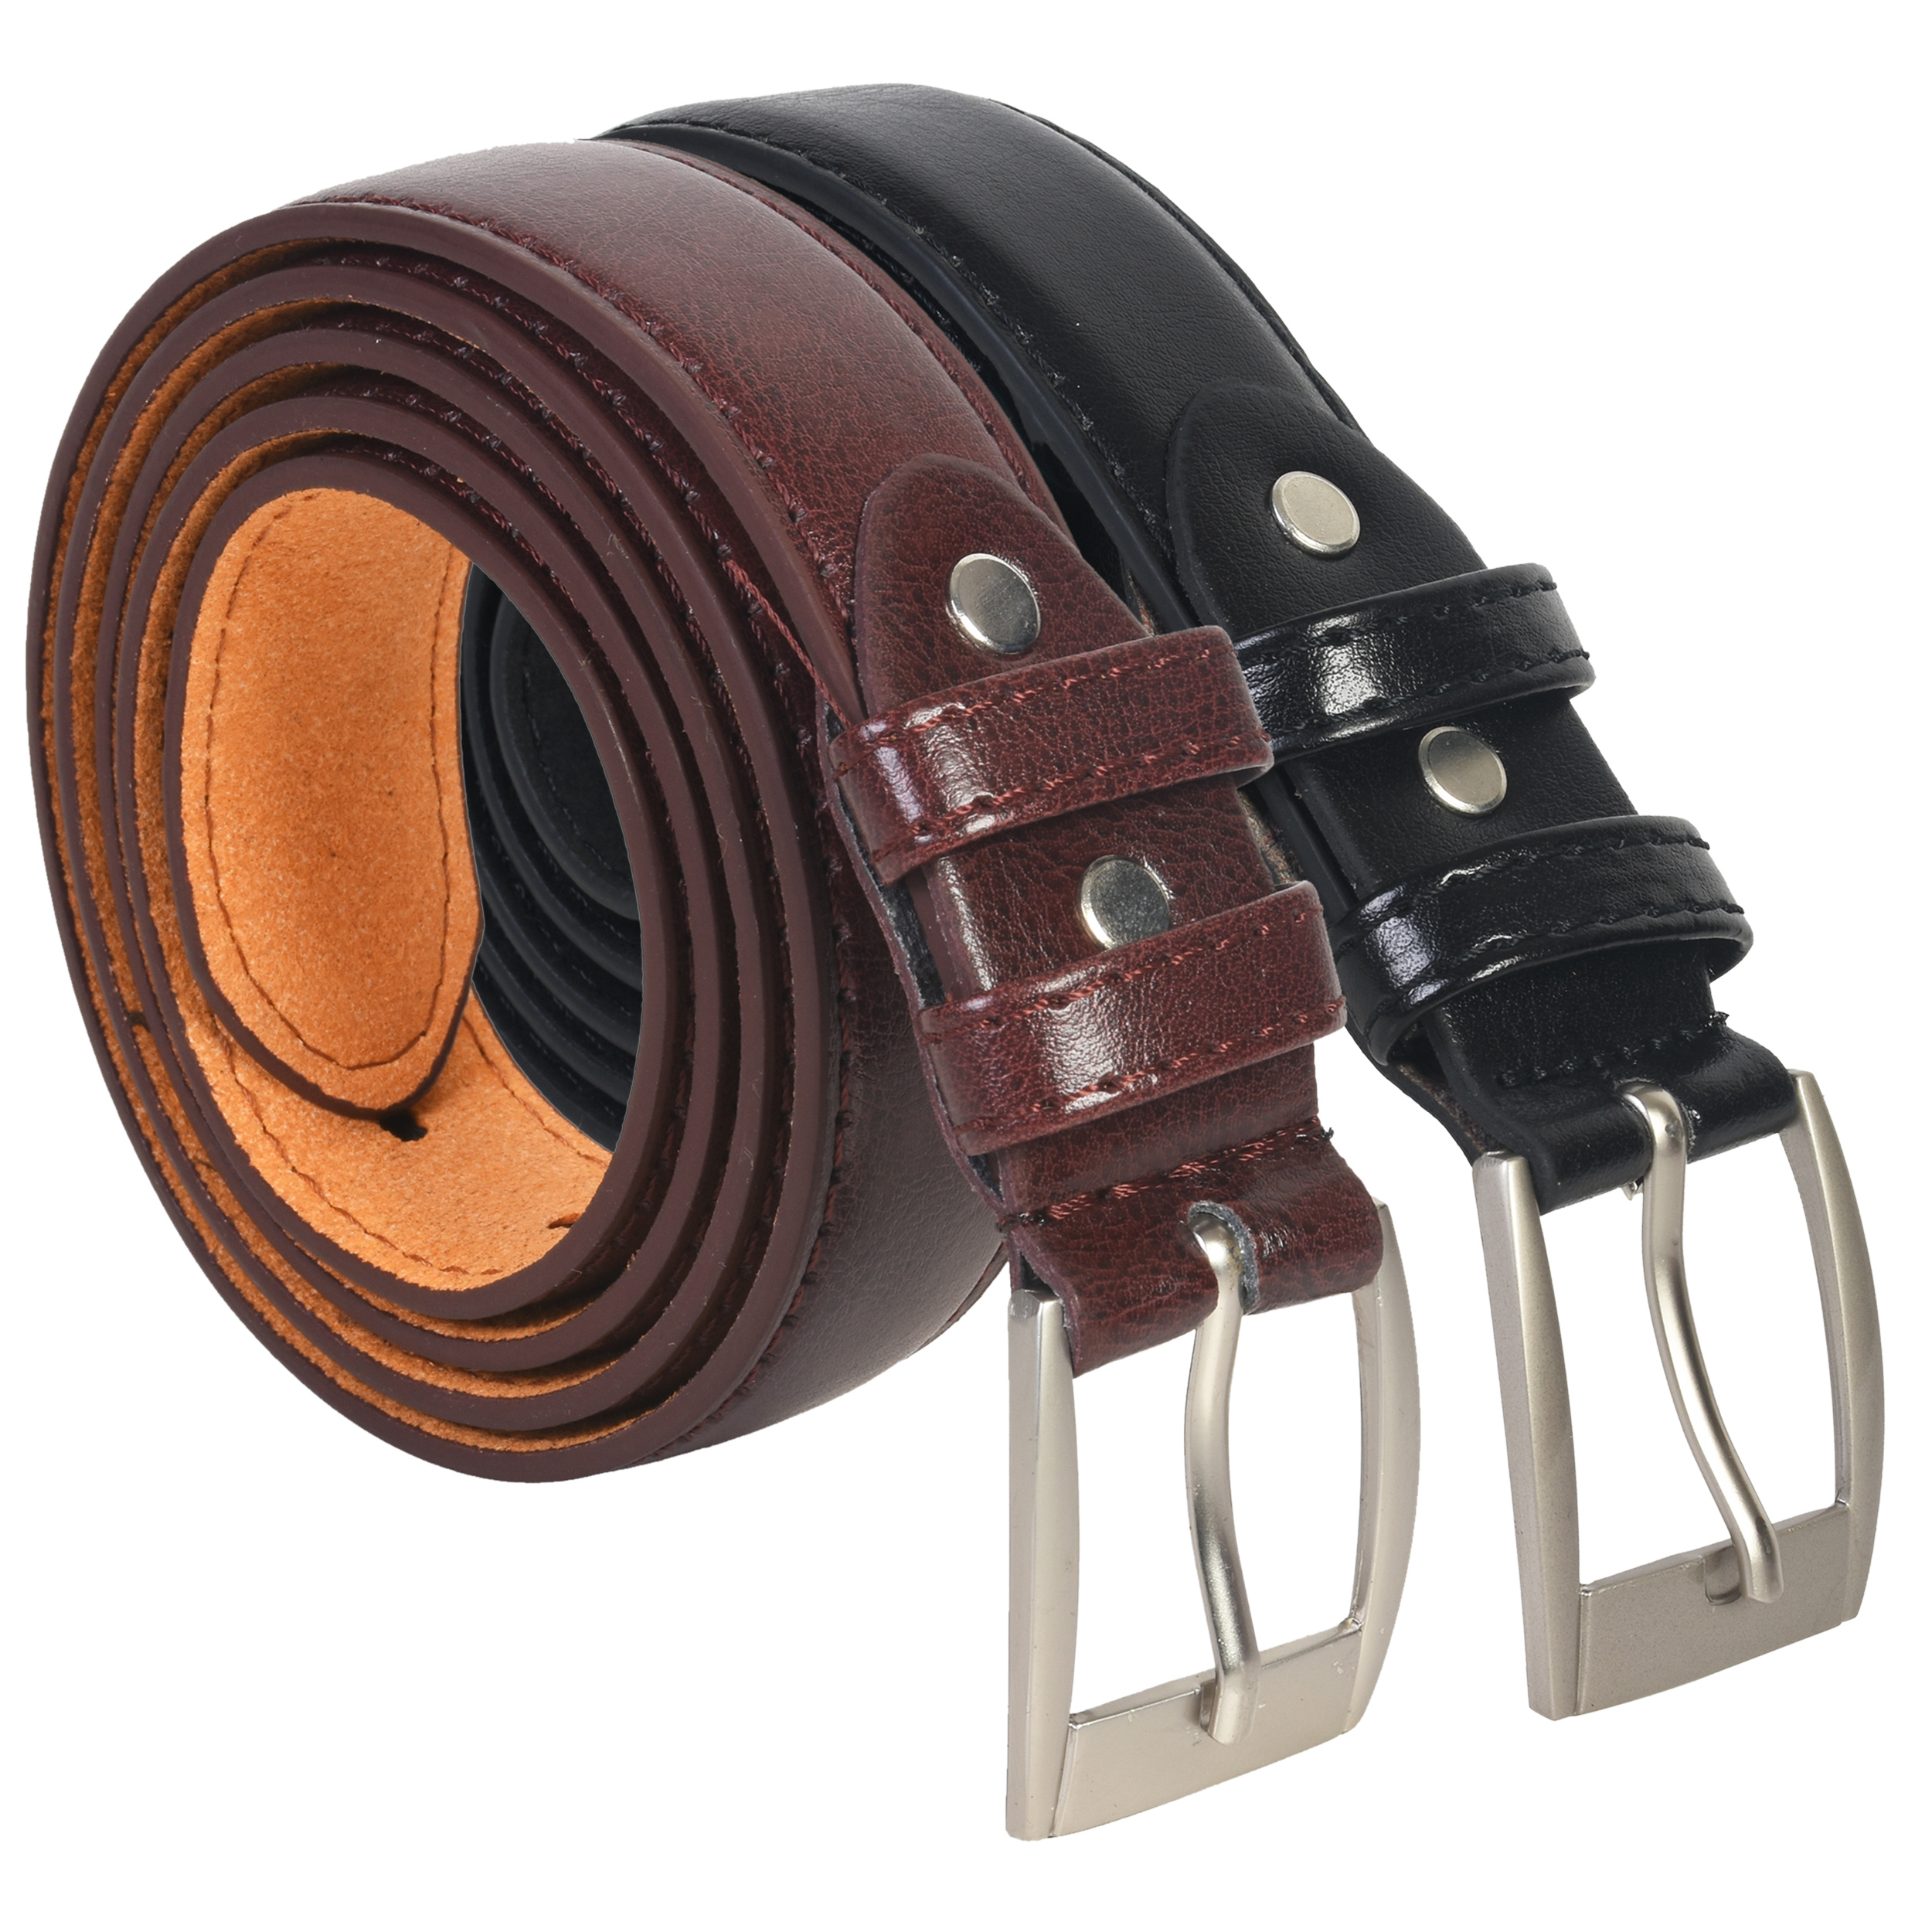 Leatherboss Genuine Leather Men Dress Belts Set of 2 (Black & Brown) | eBay